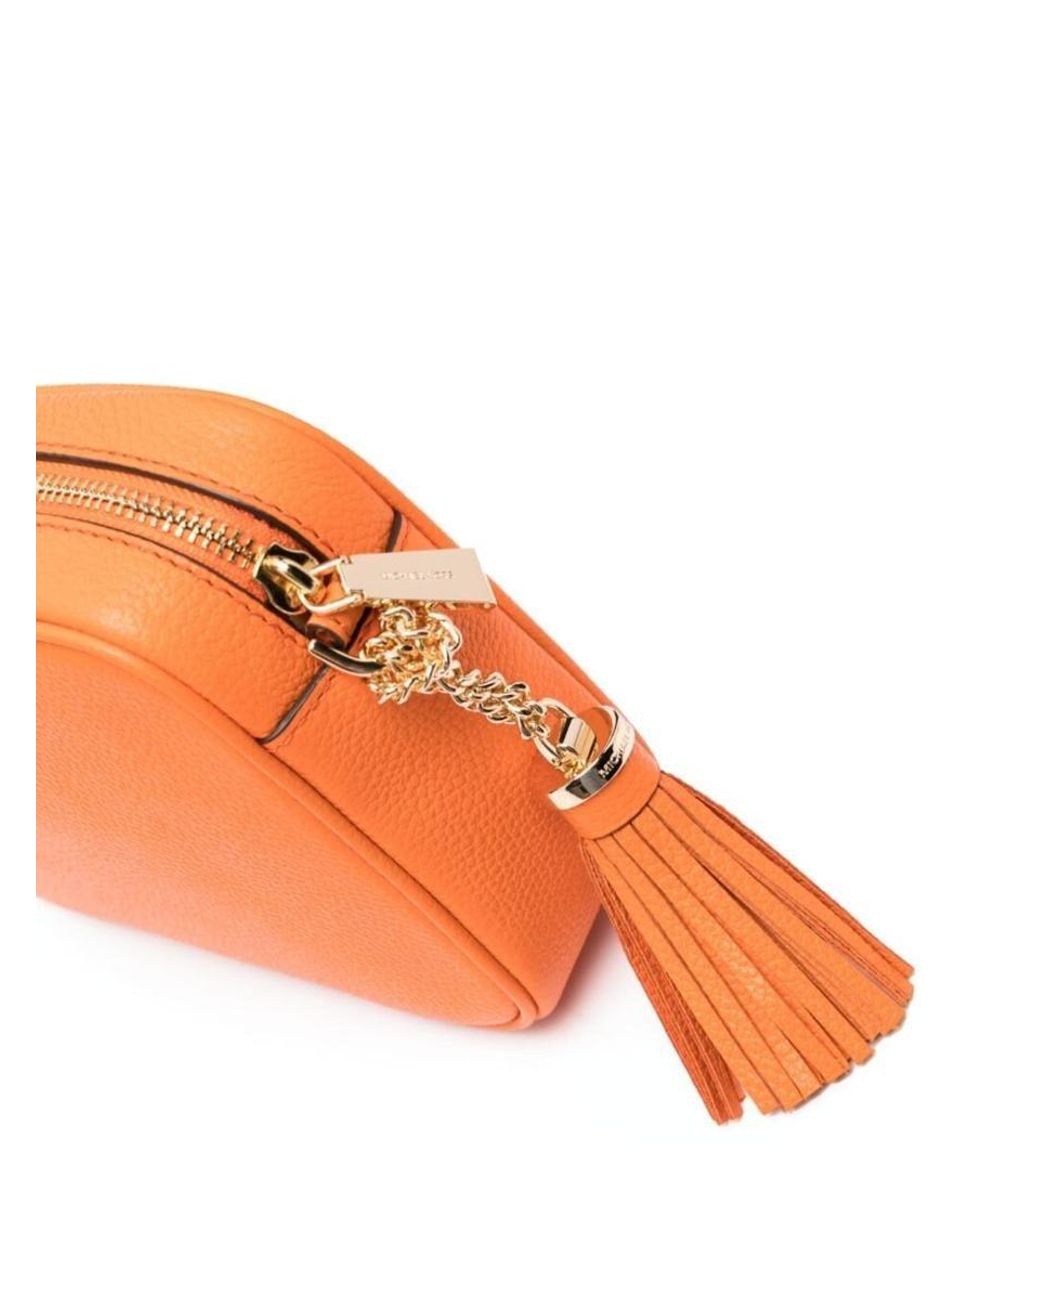 Michael Kors Orange Leather Crossbody Messenger Clutch Bag Purse